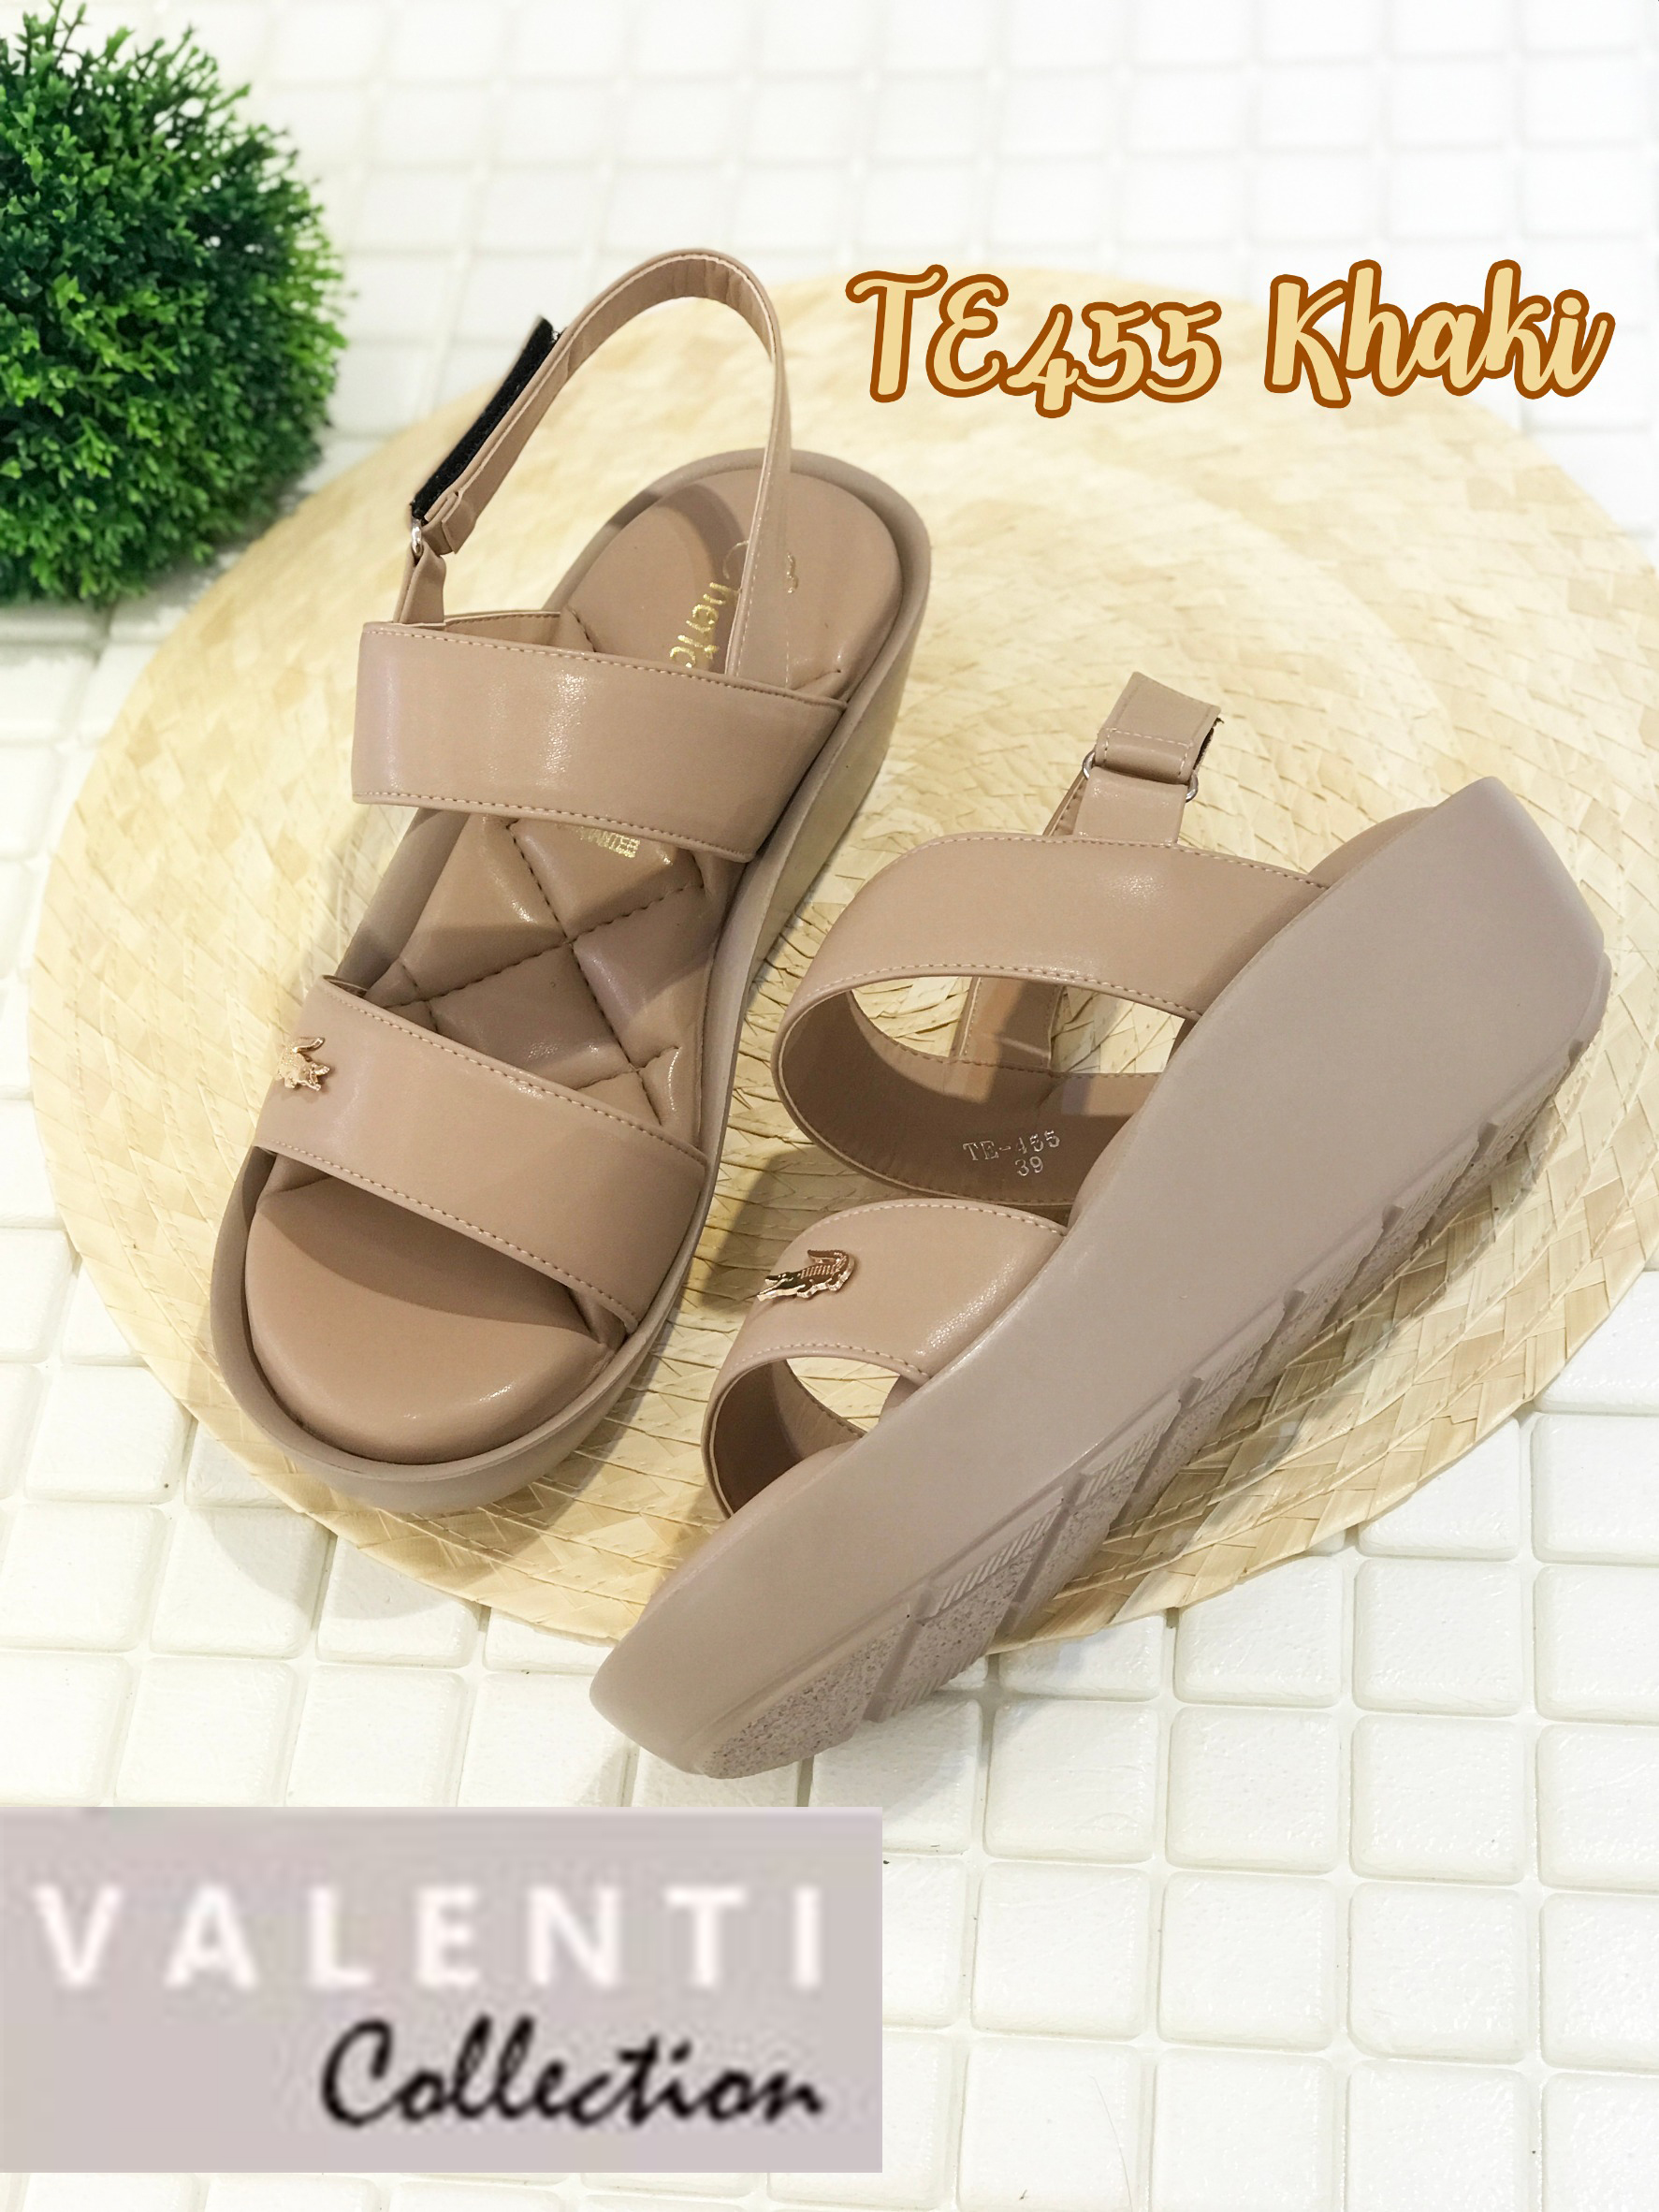 Valenti Collection รองเท้าเพื่อสุขภาพ Health & massage Therapy super soft SOFA SHOES รุ่นขายดี นุ่มมาก เบา ใส่สบาย รุ่น TE455